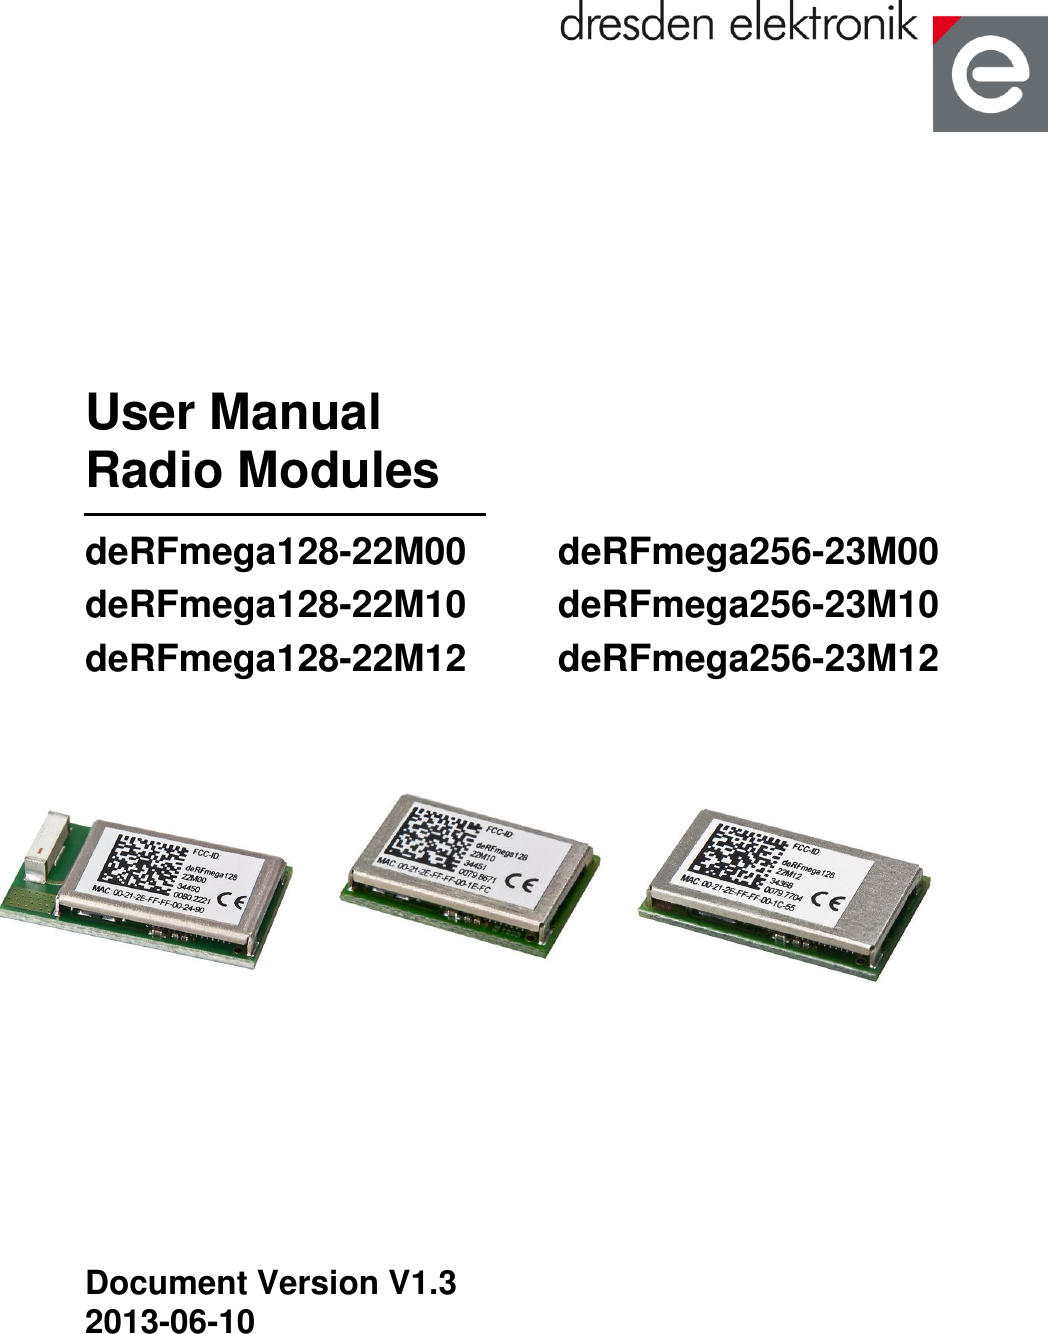  User Manual Radio Modules deRFmega128-22M00    deRFmega256-23M00 deRFmega128-22M10    deRFmega256-23M10   deRFmega128-22M12    deRFmega256-23M12                           Document Version V1.3 2013-06-10 